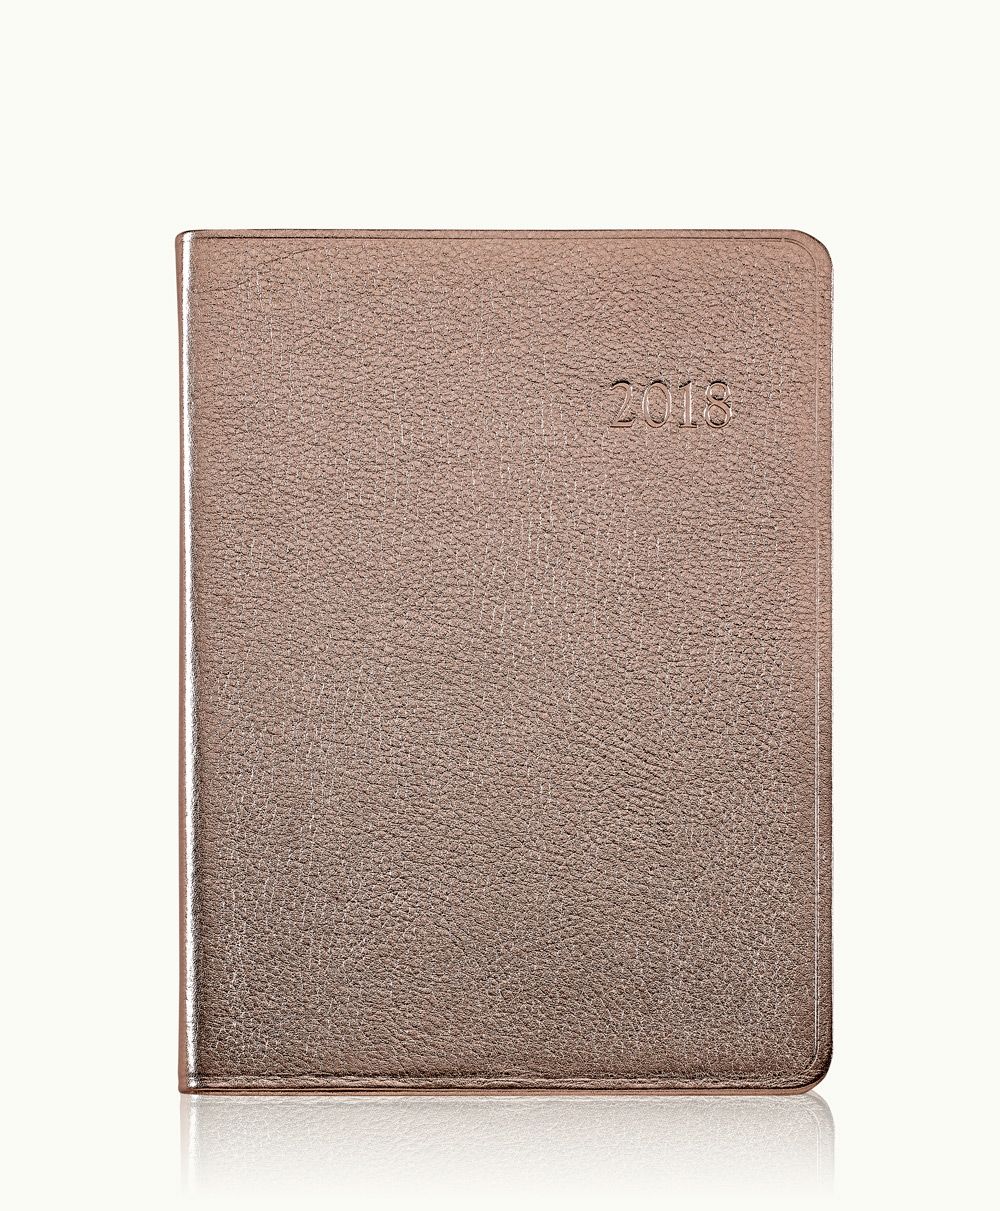 2018 Desk Diary Rose Gold Metallics Leather | GiGi New York